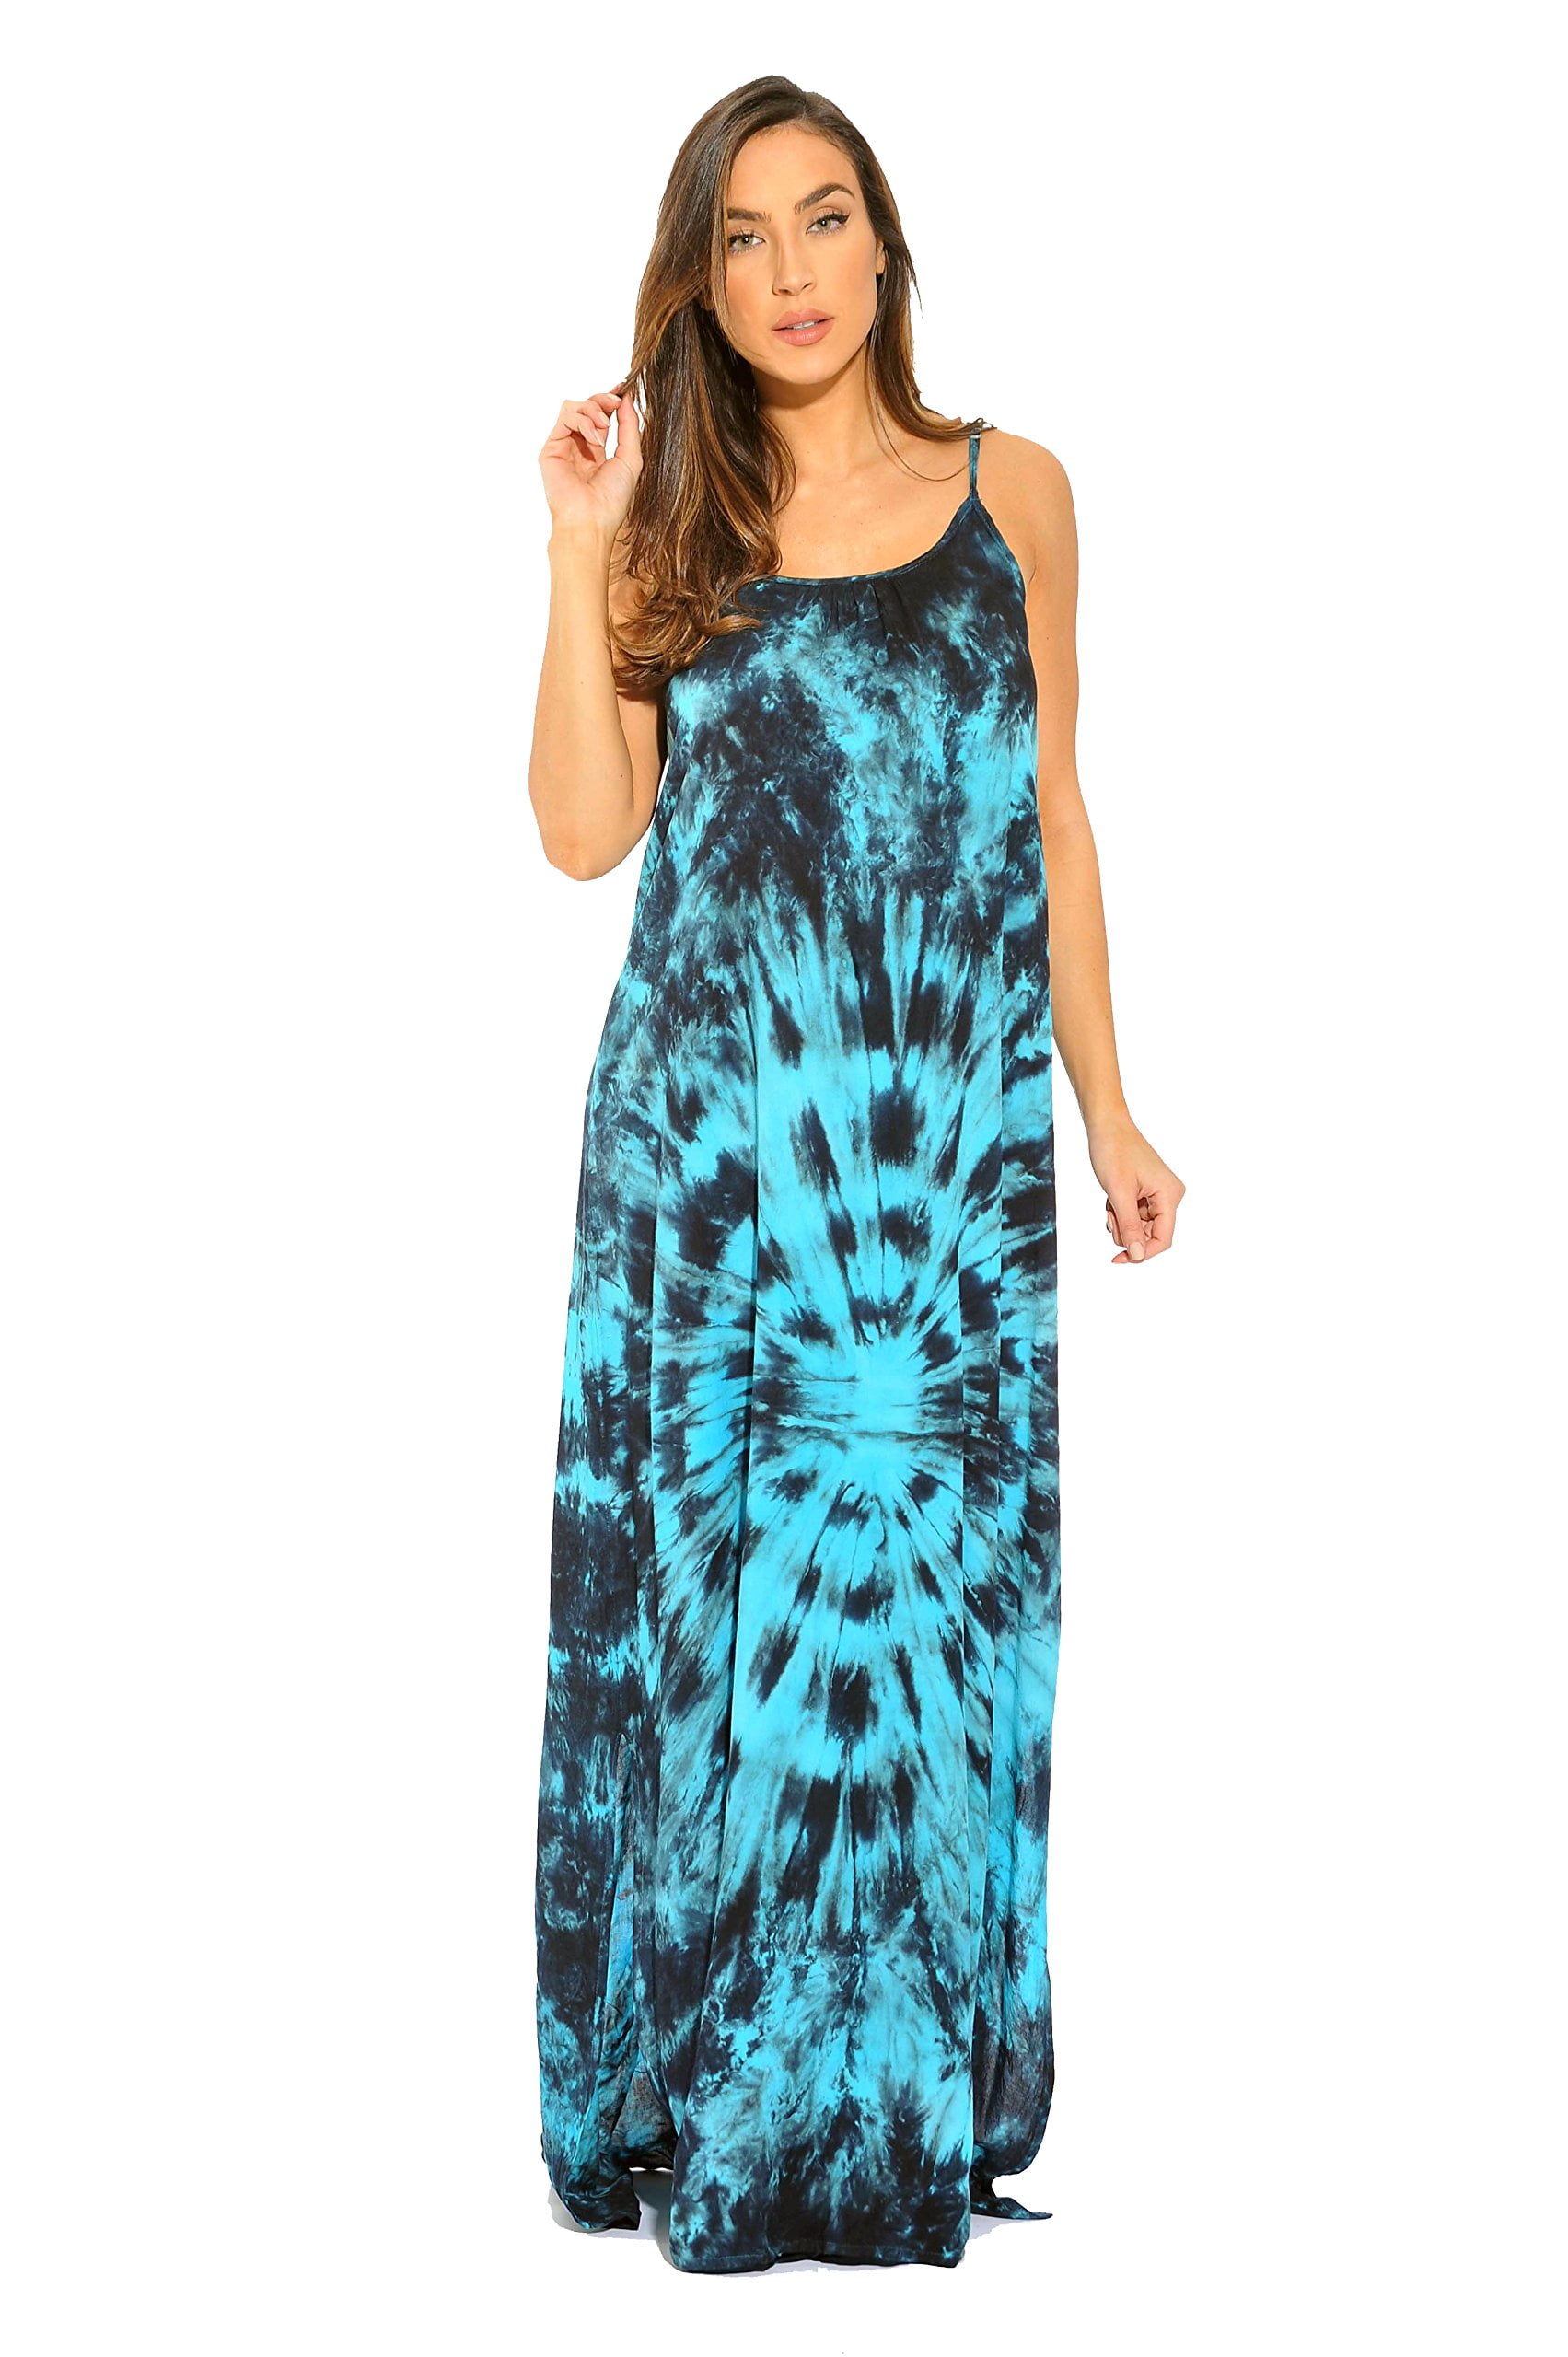 Riviera Sun Tie Dye Spaghetti Strap Maxi Dress (Black / Turquoise, 1X) -  Walmart.com